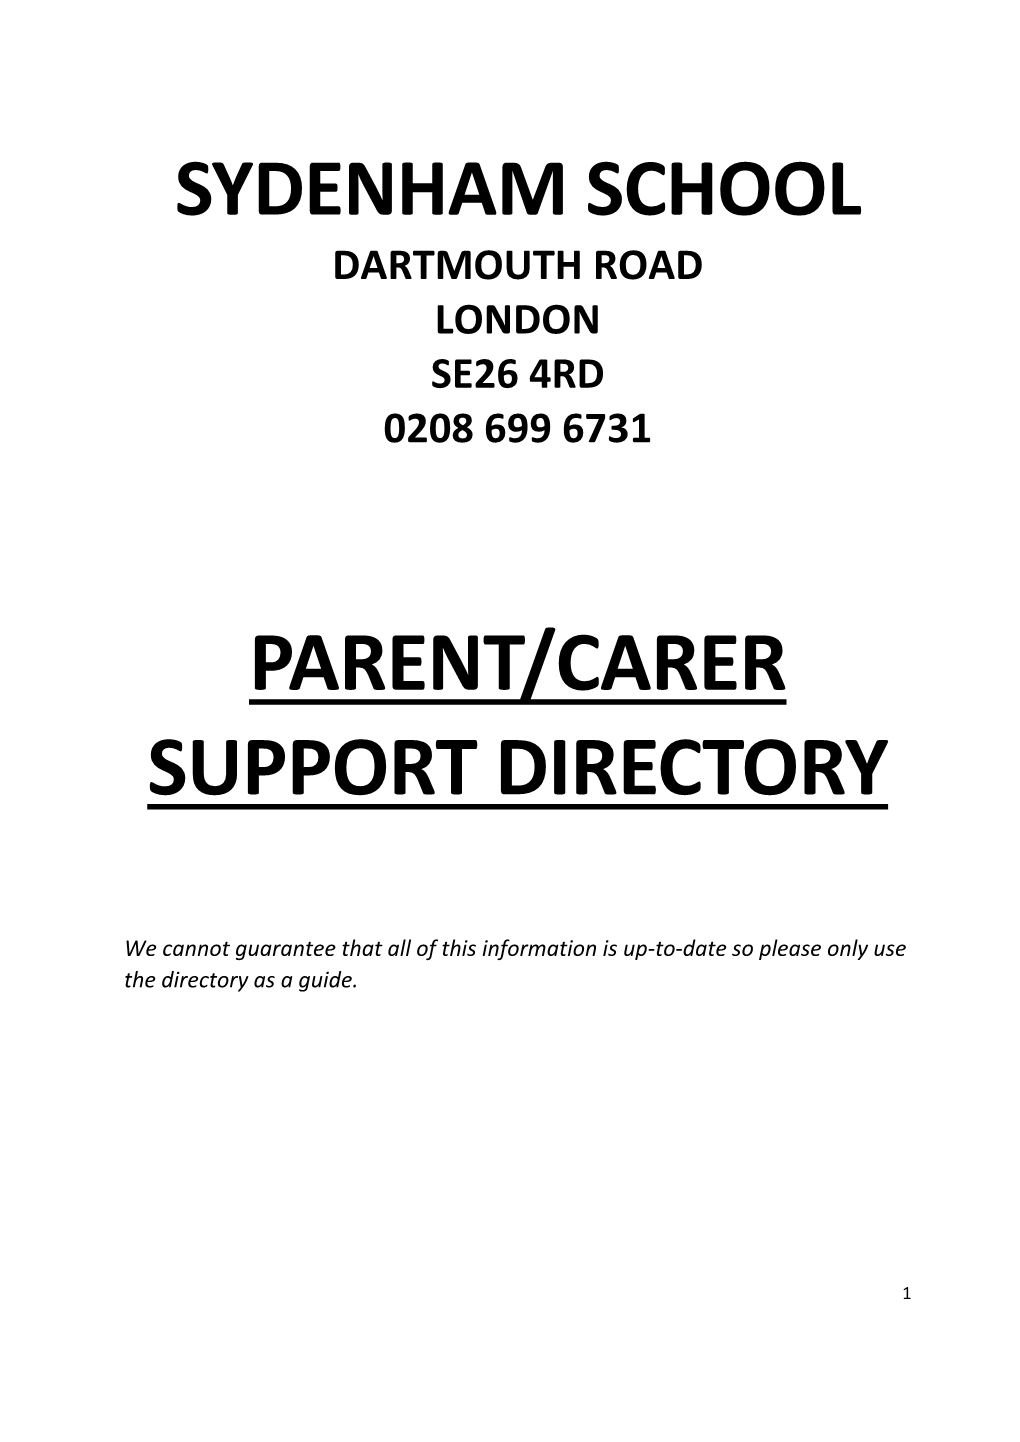 Parent/Carer Support Directory